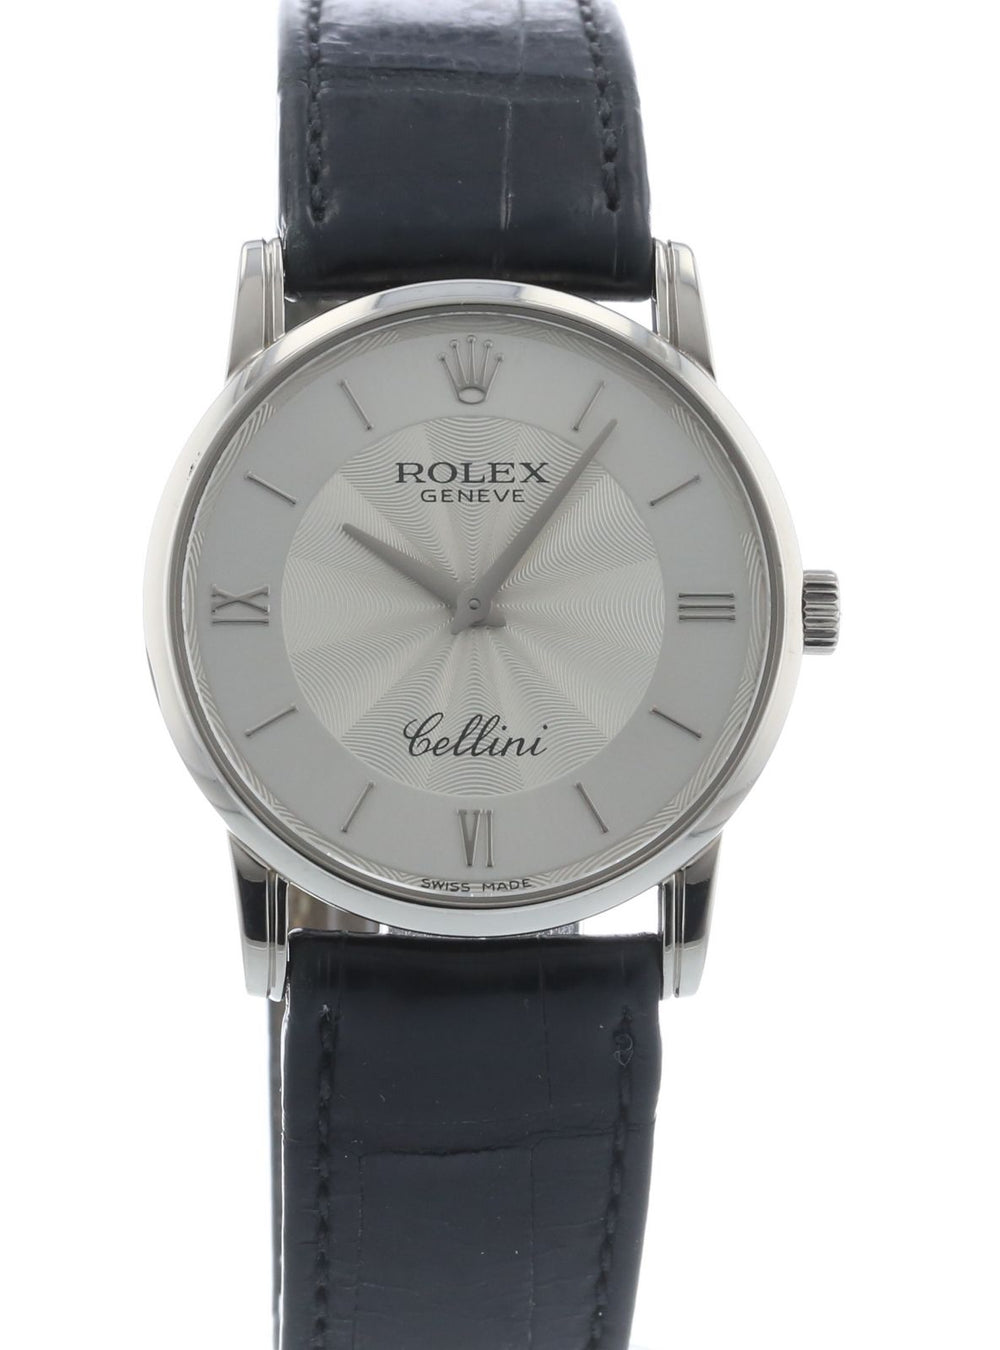 Rolex Cellini 5116 1